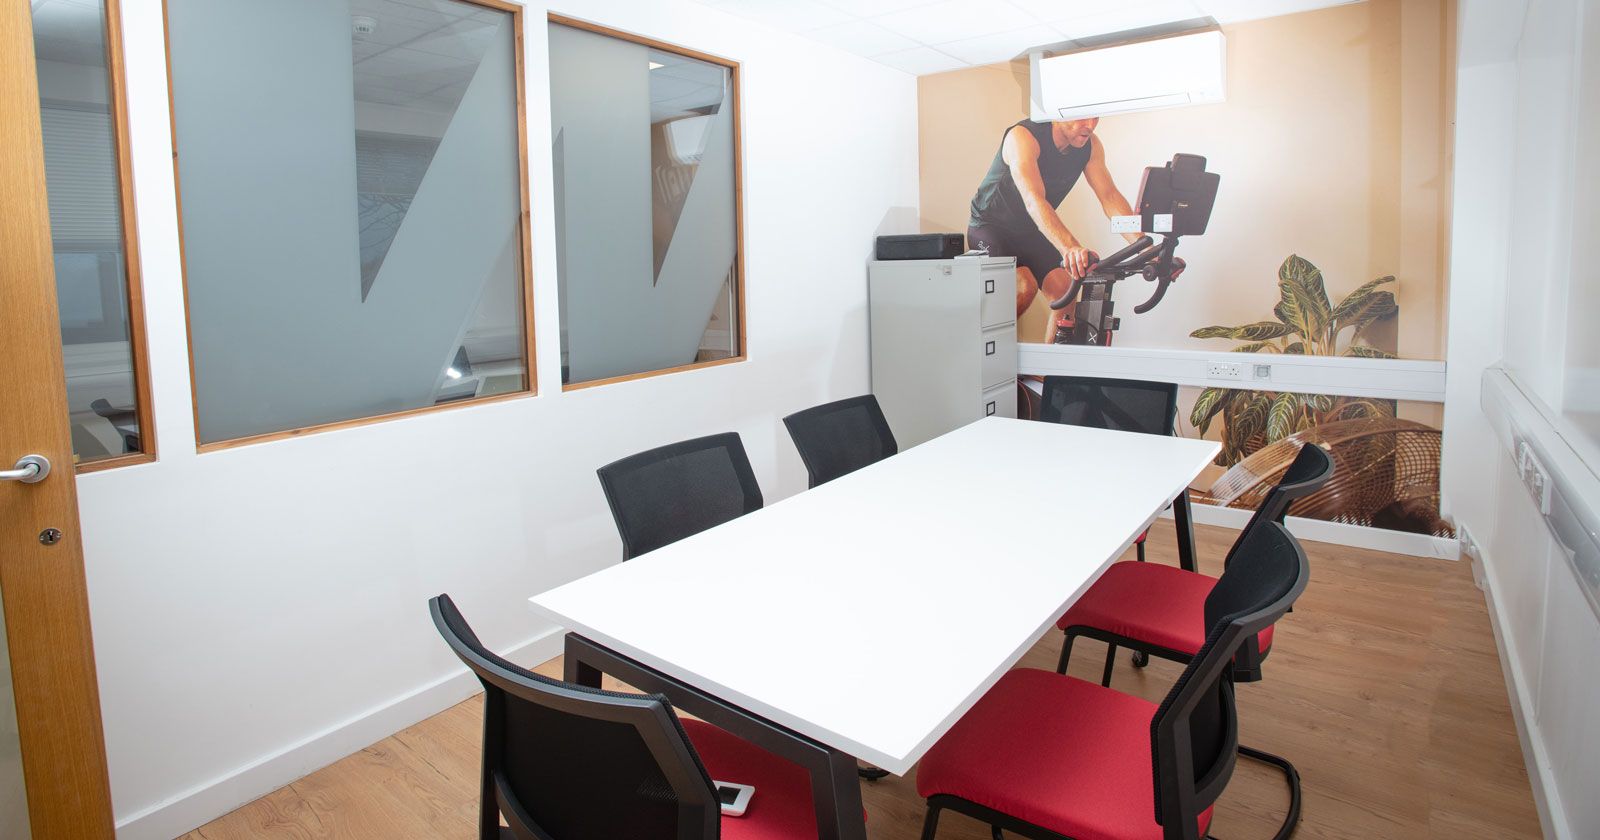 Wattbike Meeting room with Floor to Ceiling Graphics Office Design